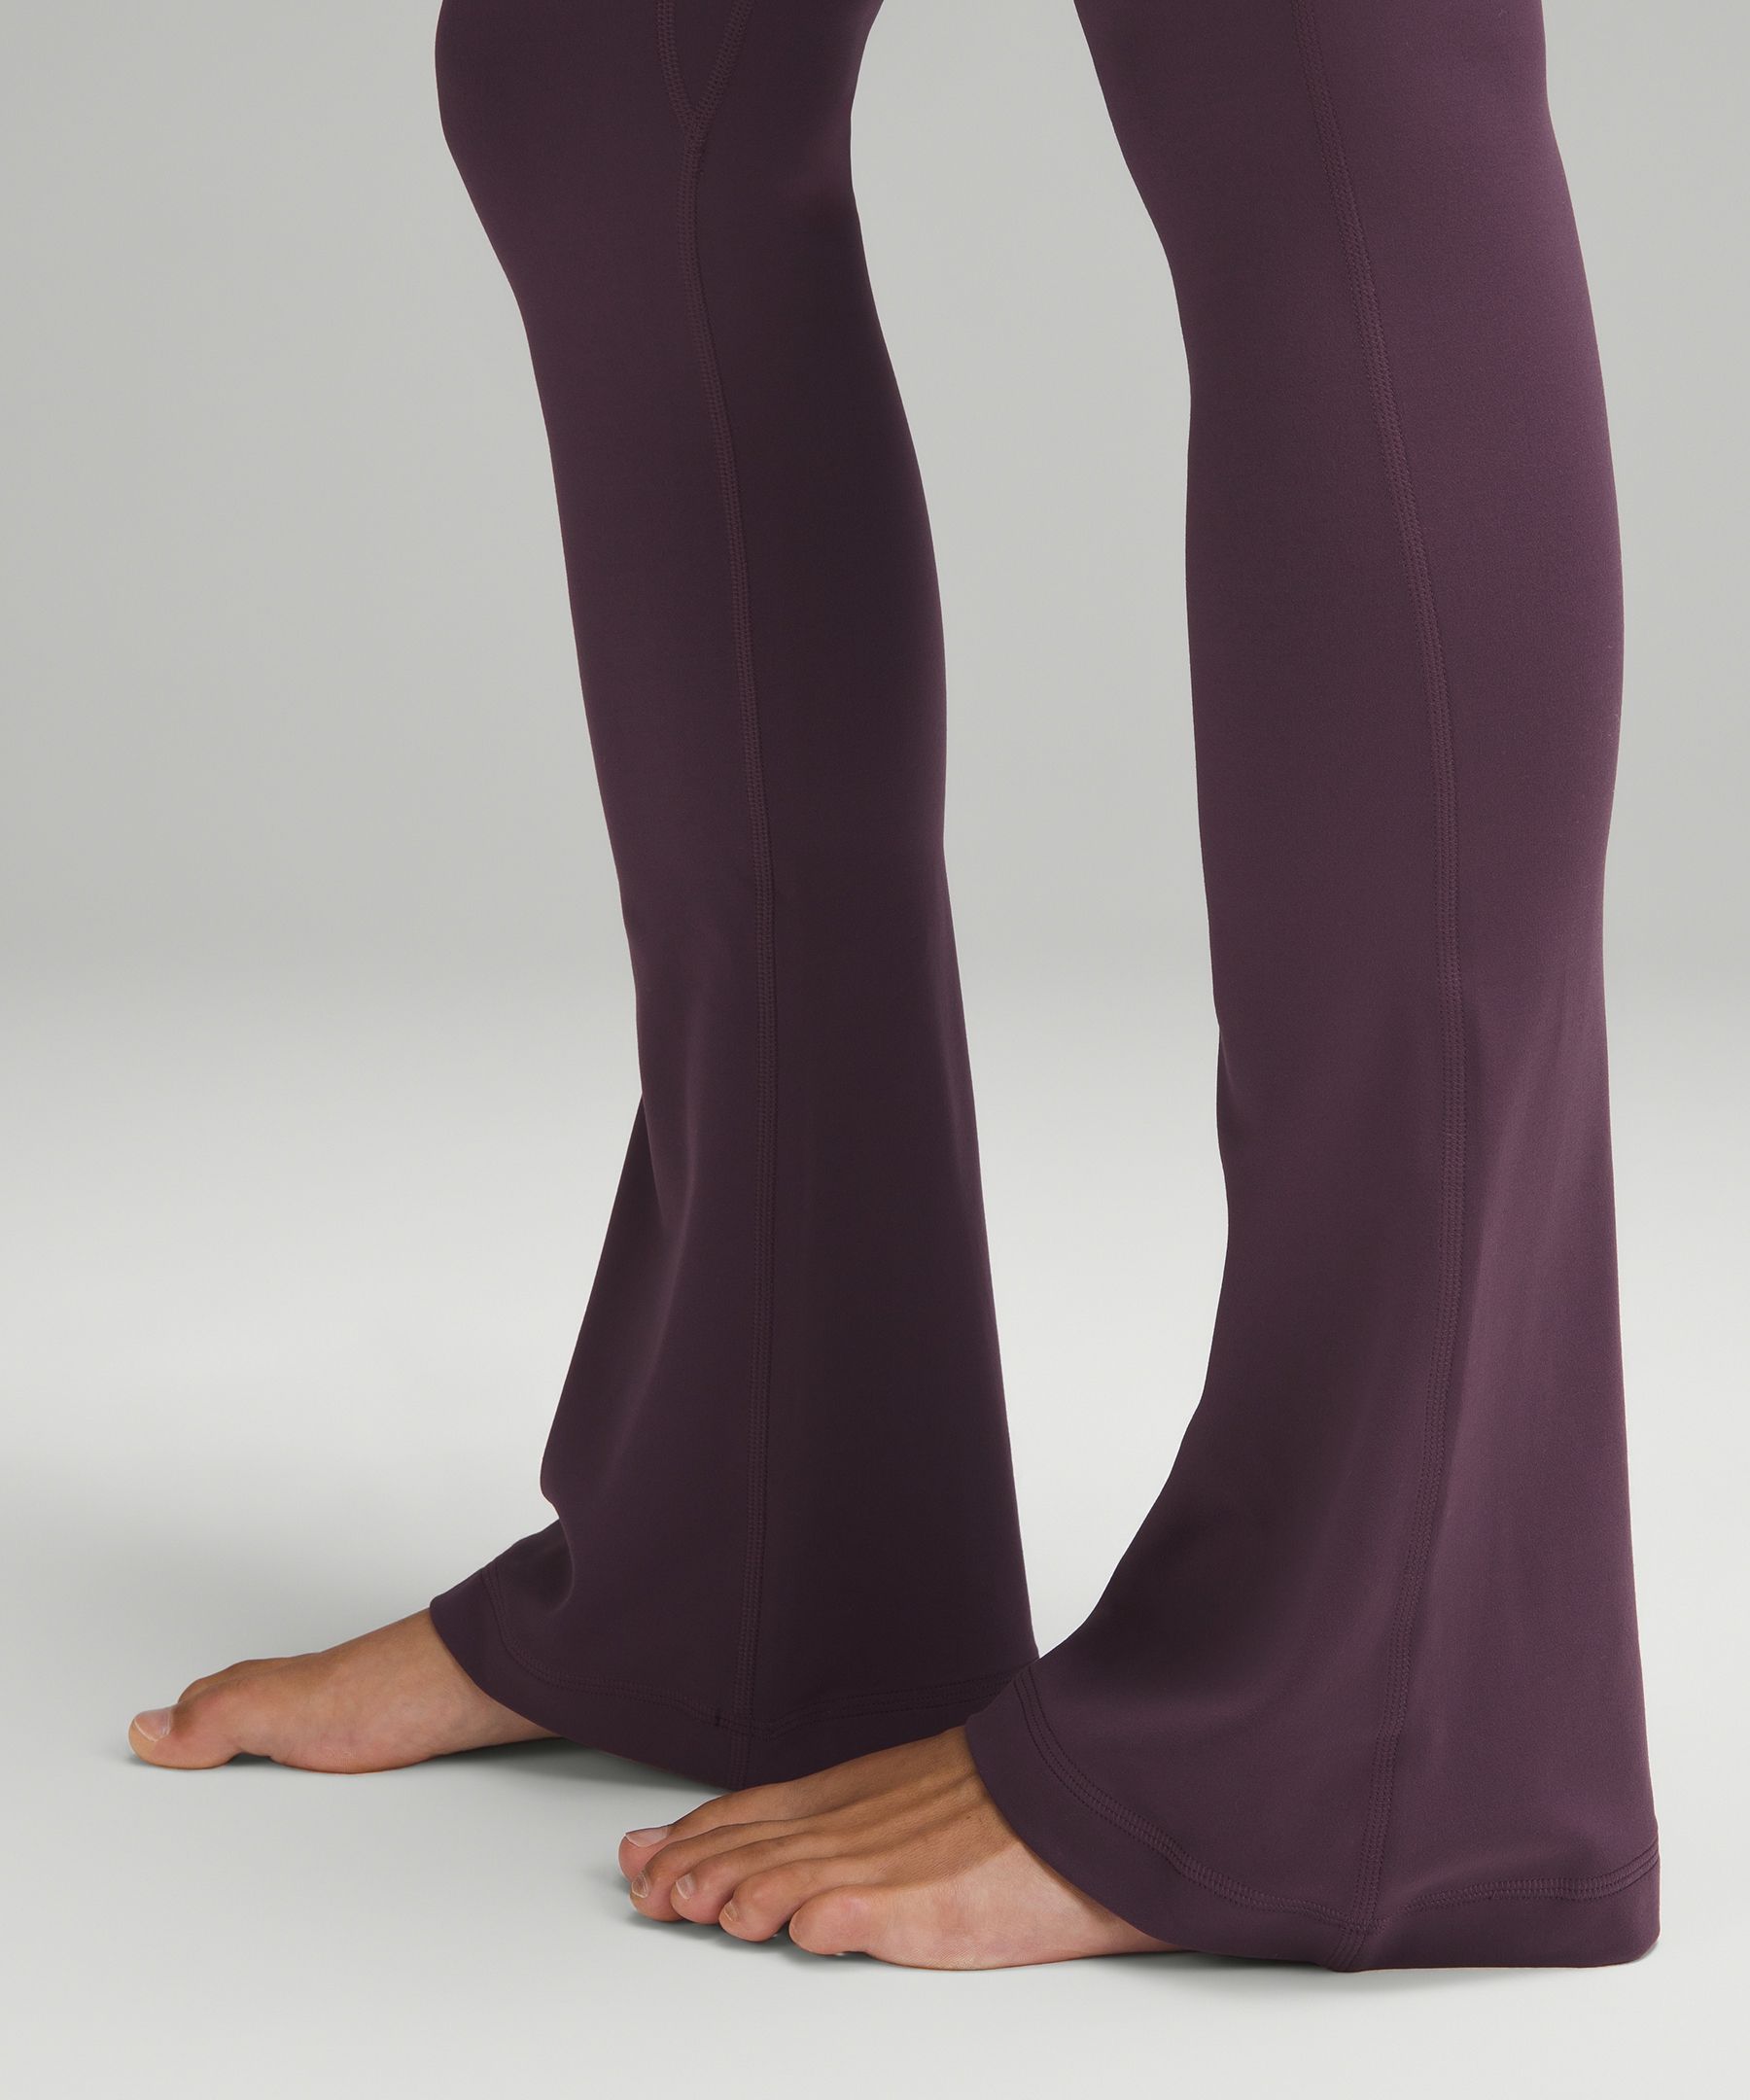 Lululemon Align™ High-rise Mini-flared Pants Extra Short - Black